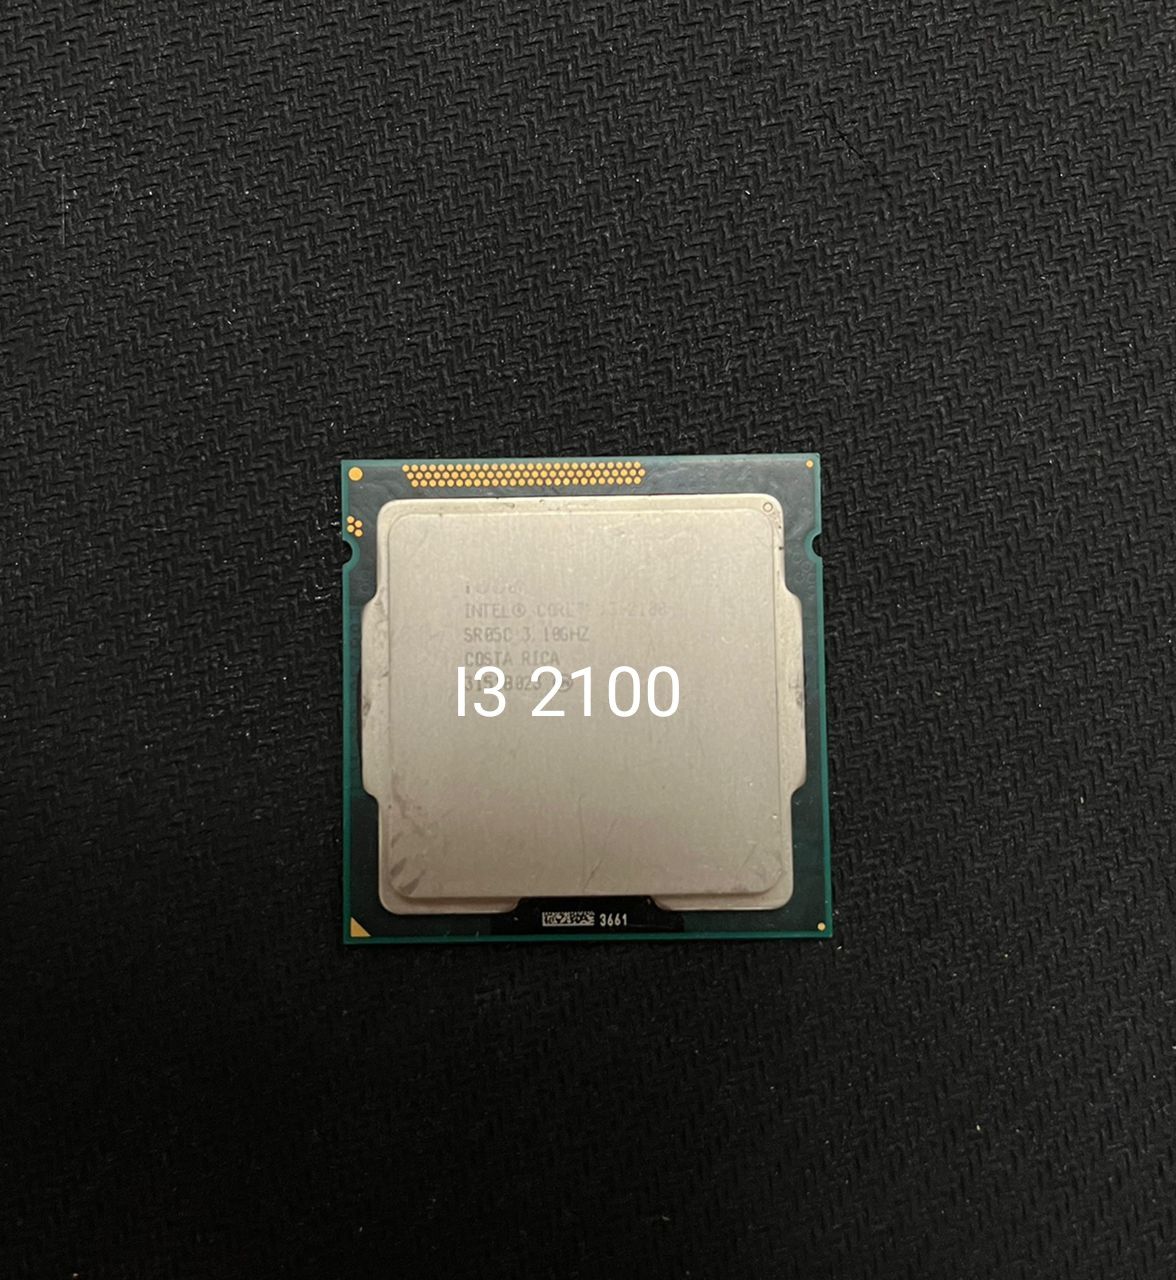 Intel core i3 2100